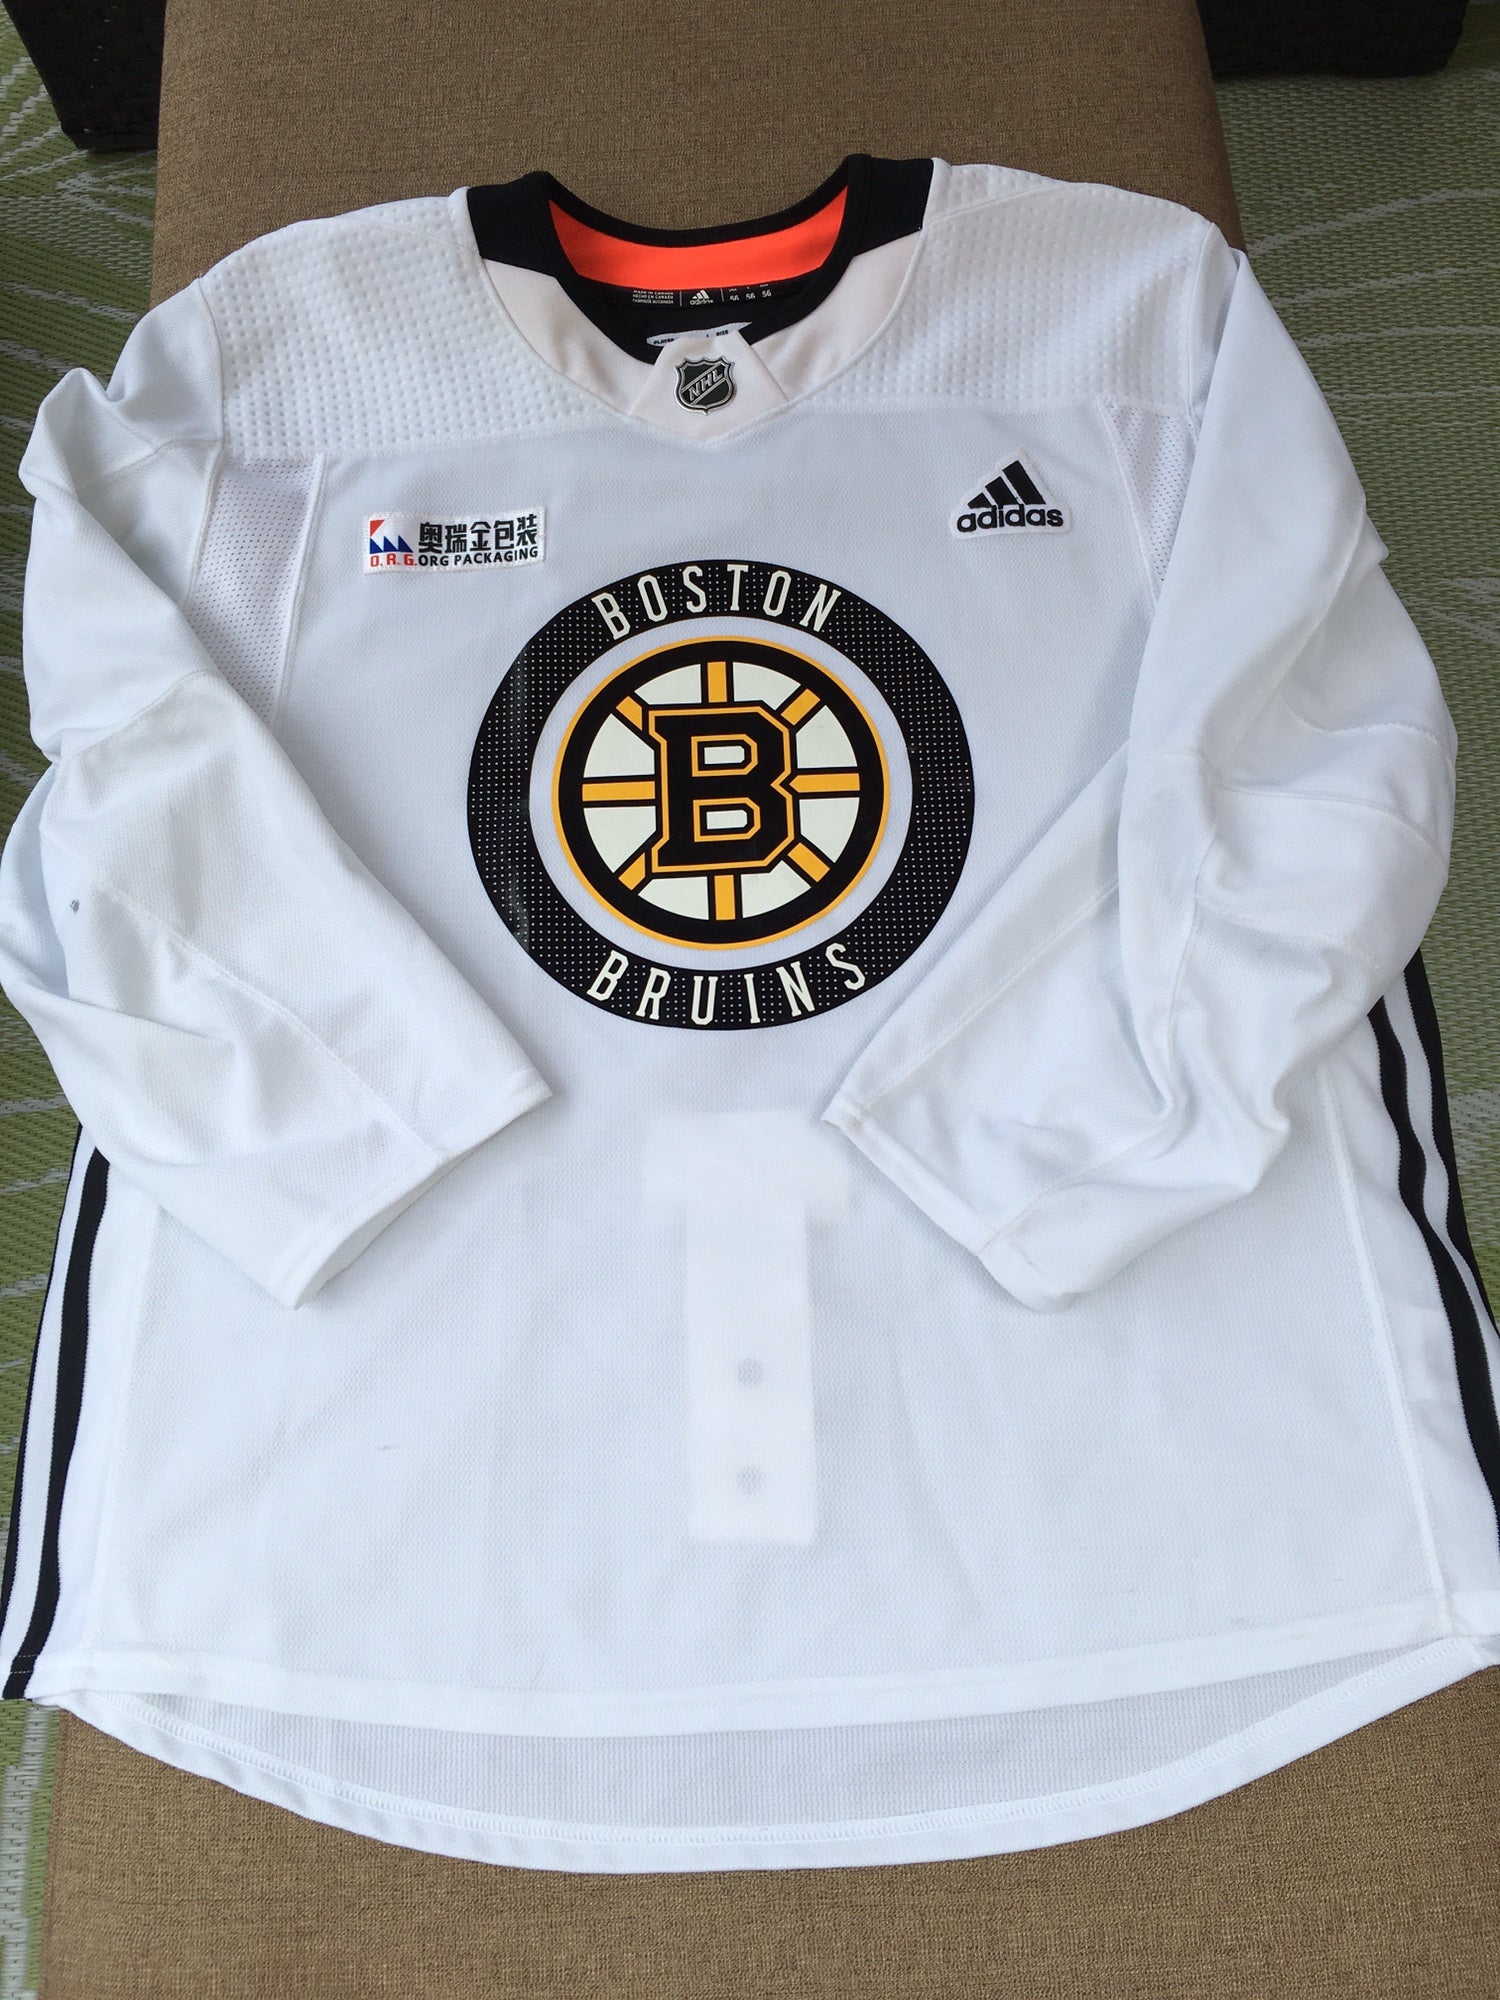 SOLD) Boston Bruins MIC Adidas Practice Jerseys with Sponsor